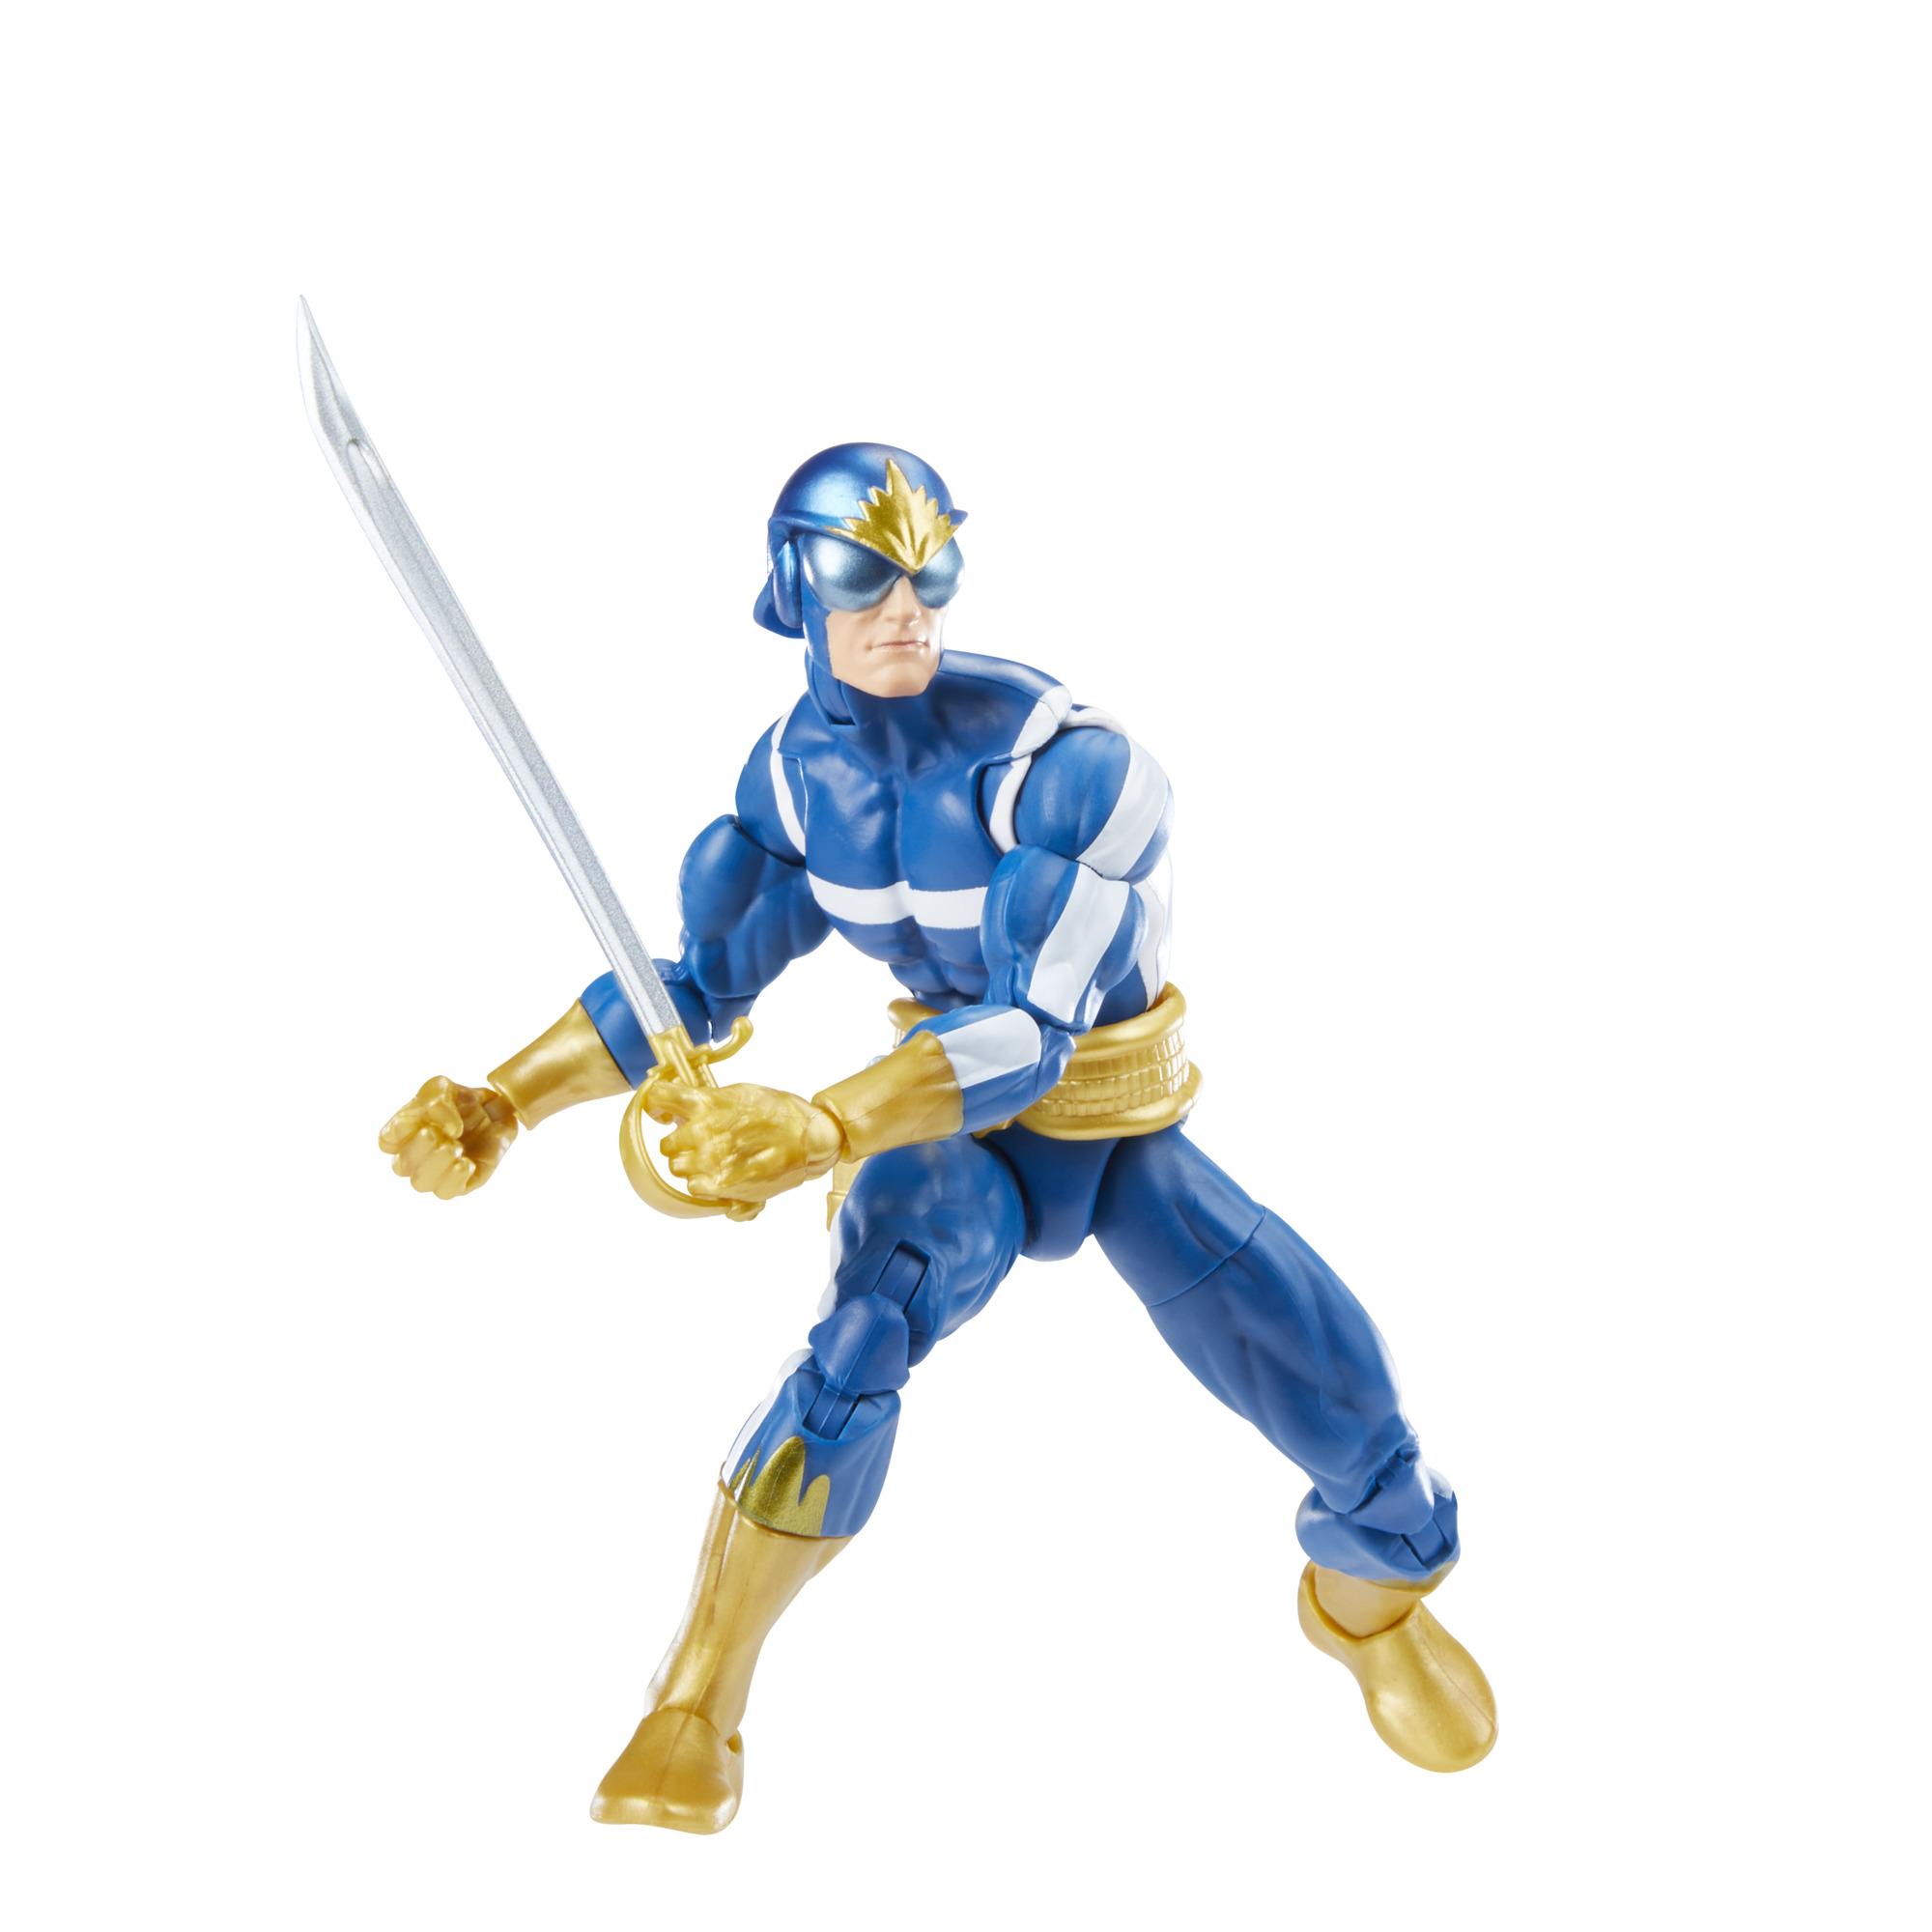 Avengers: Infinity War Titan Hero Power FX Star-Lord Action Figure